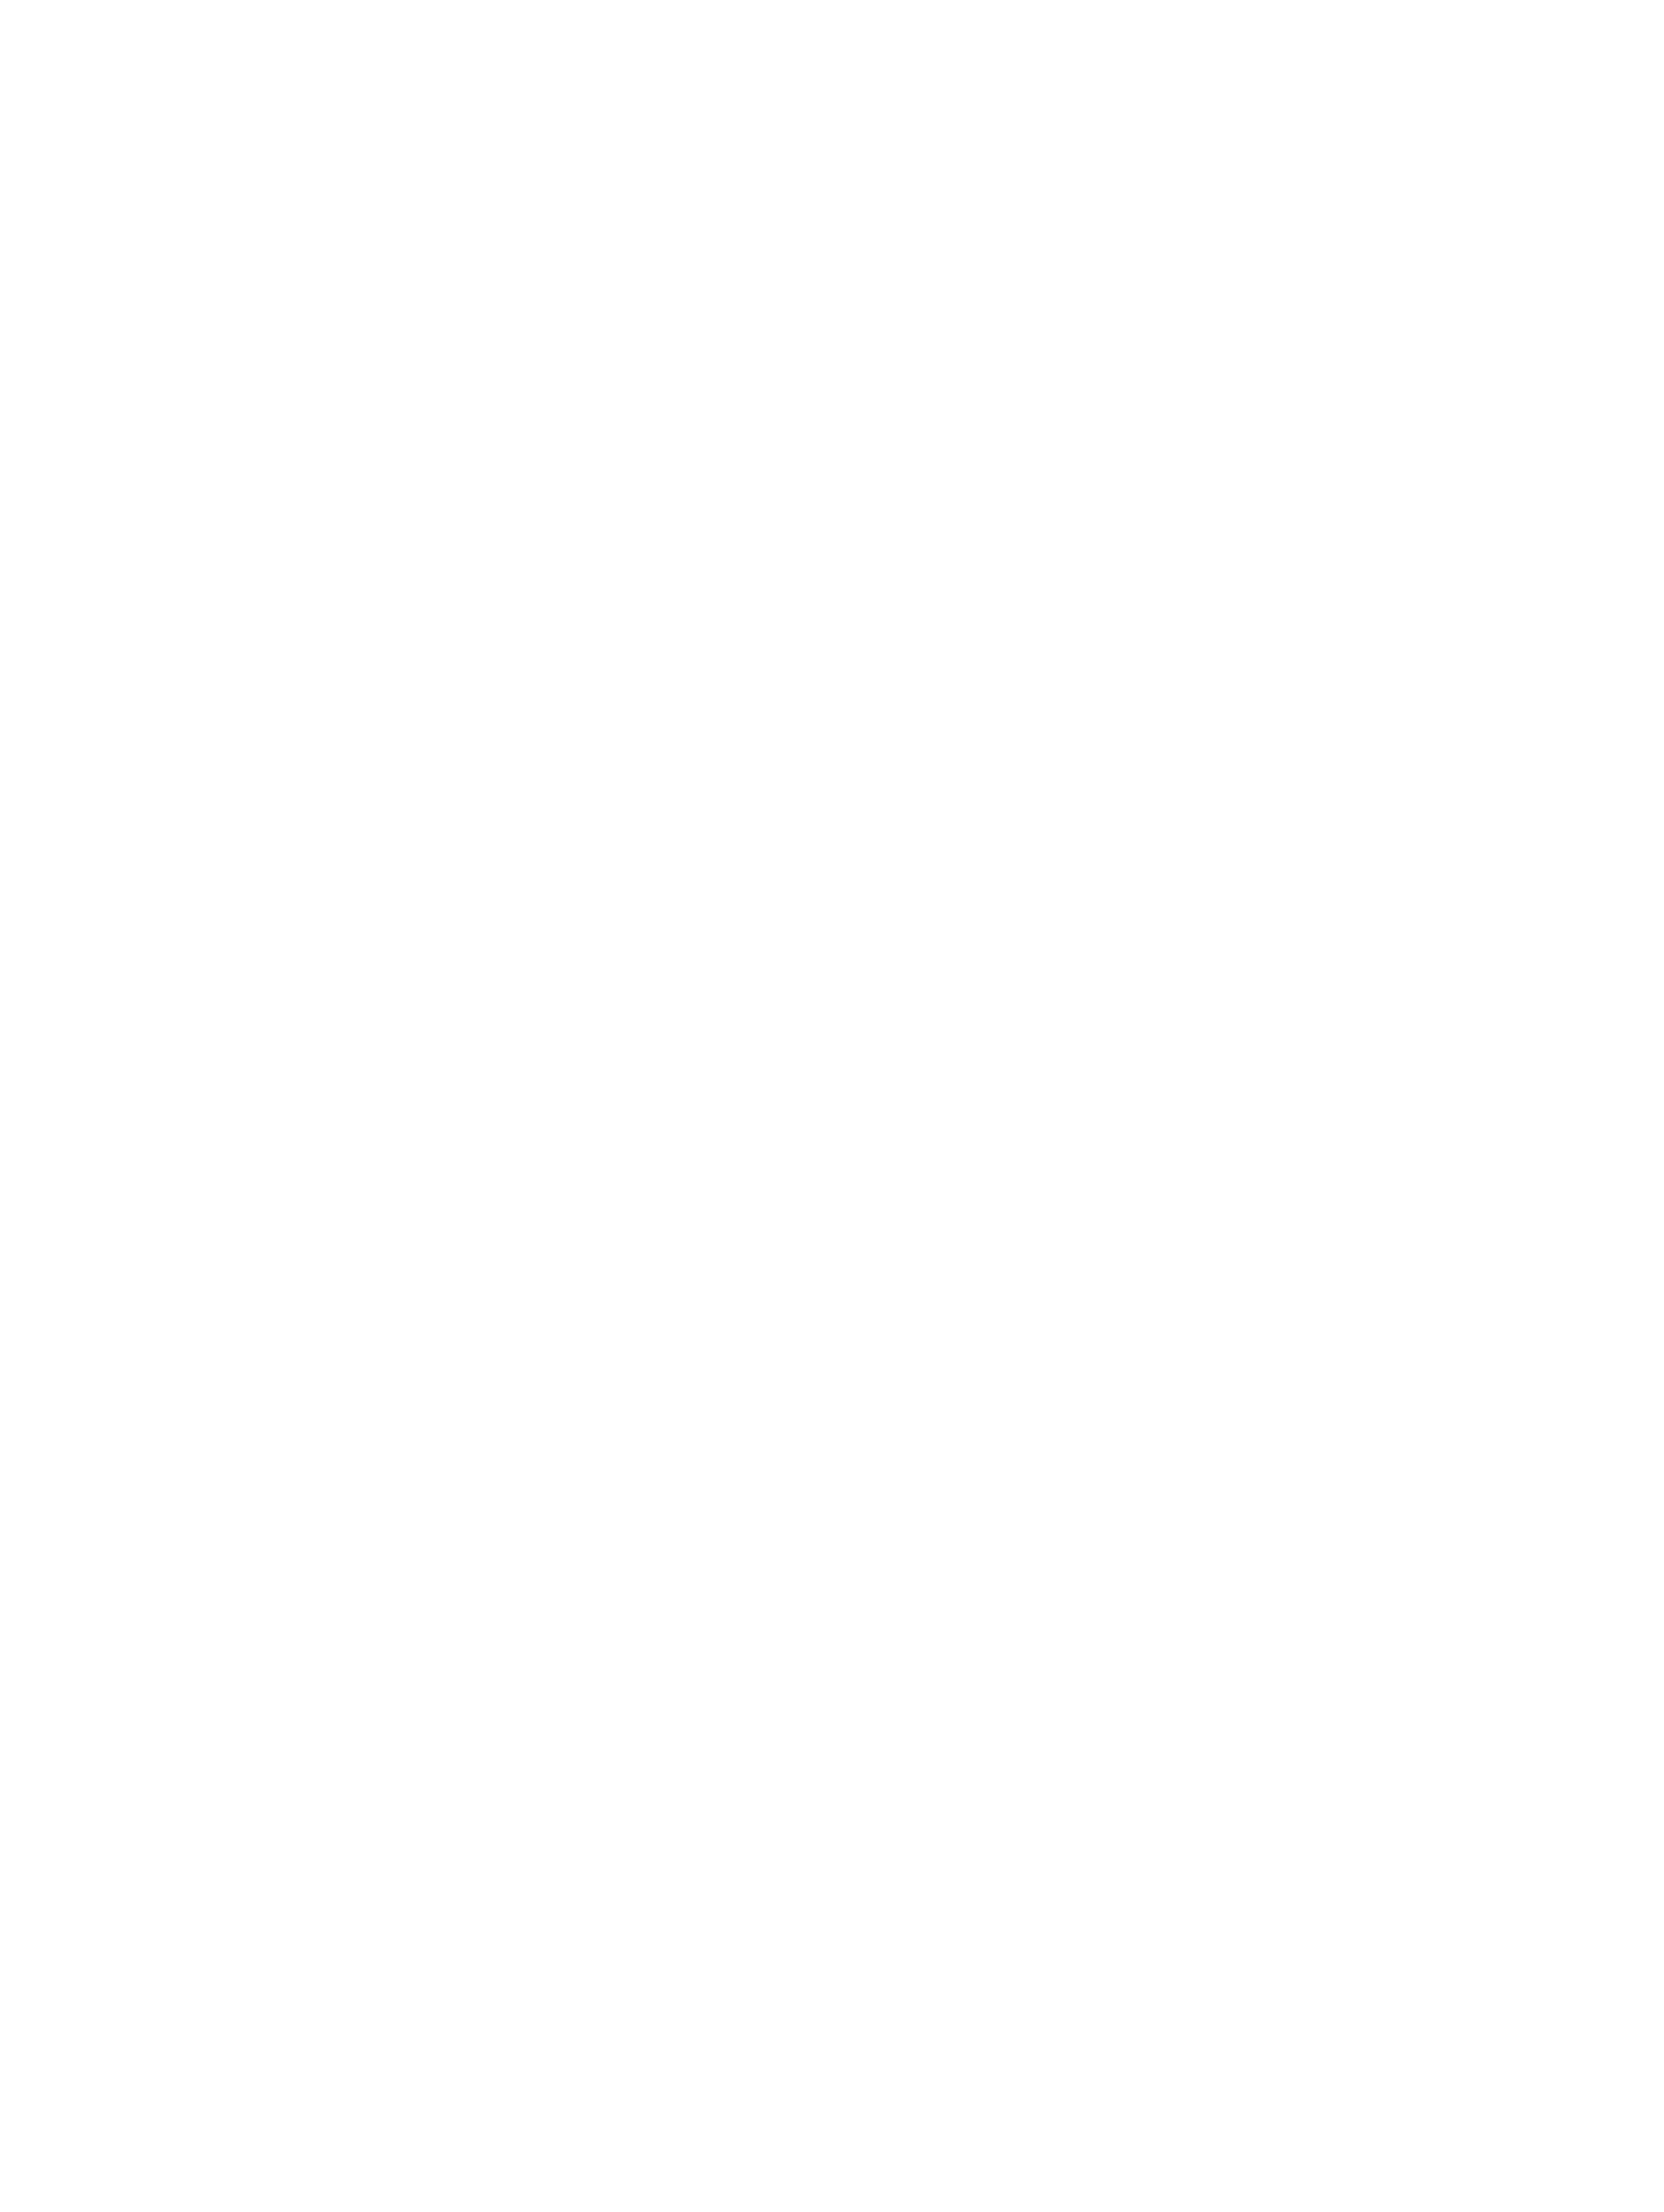 Pack 29